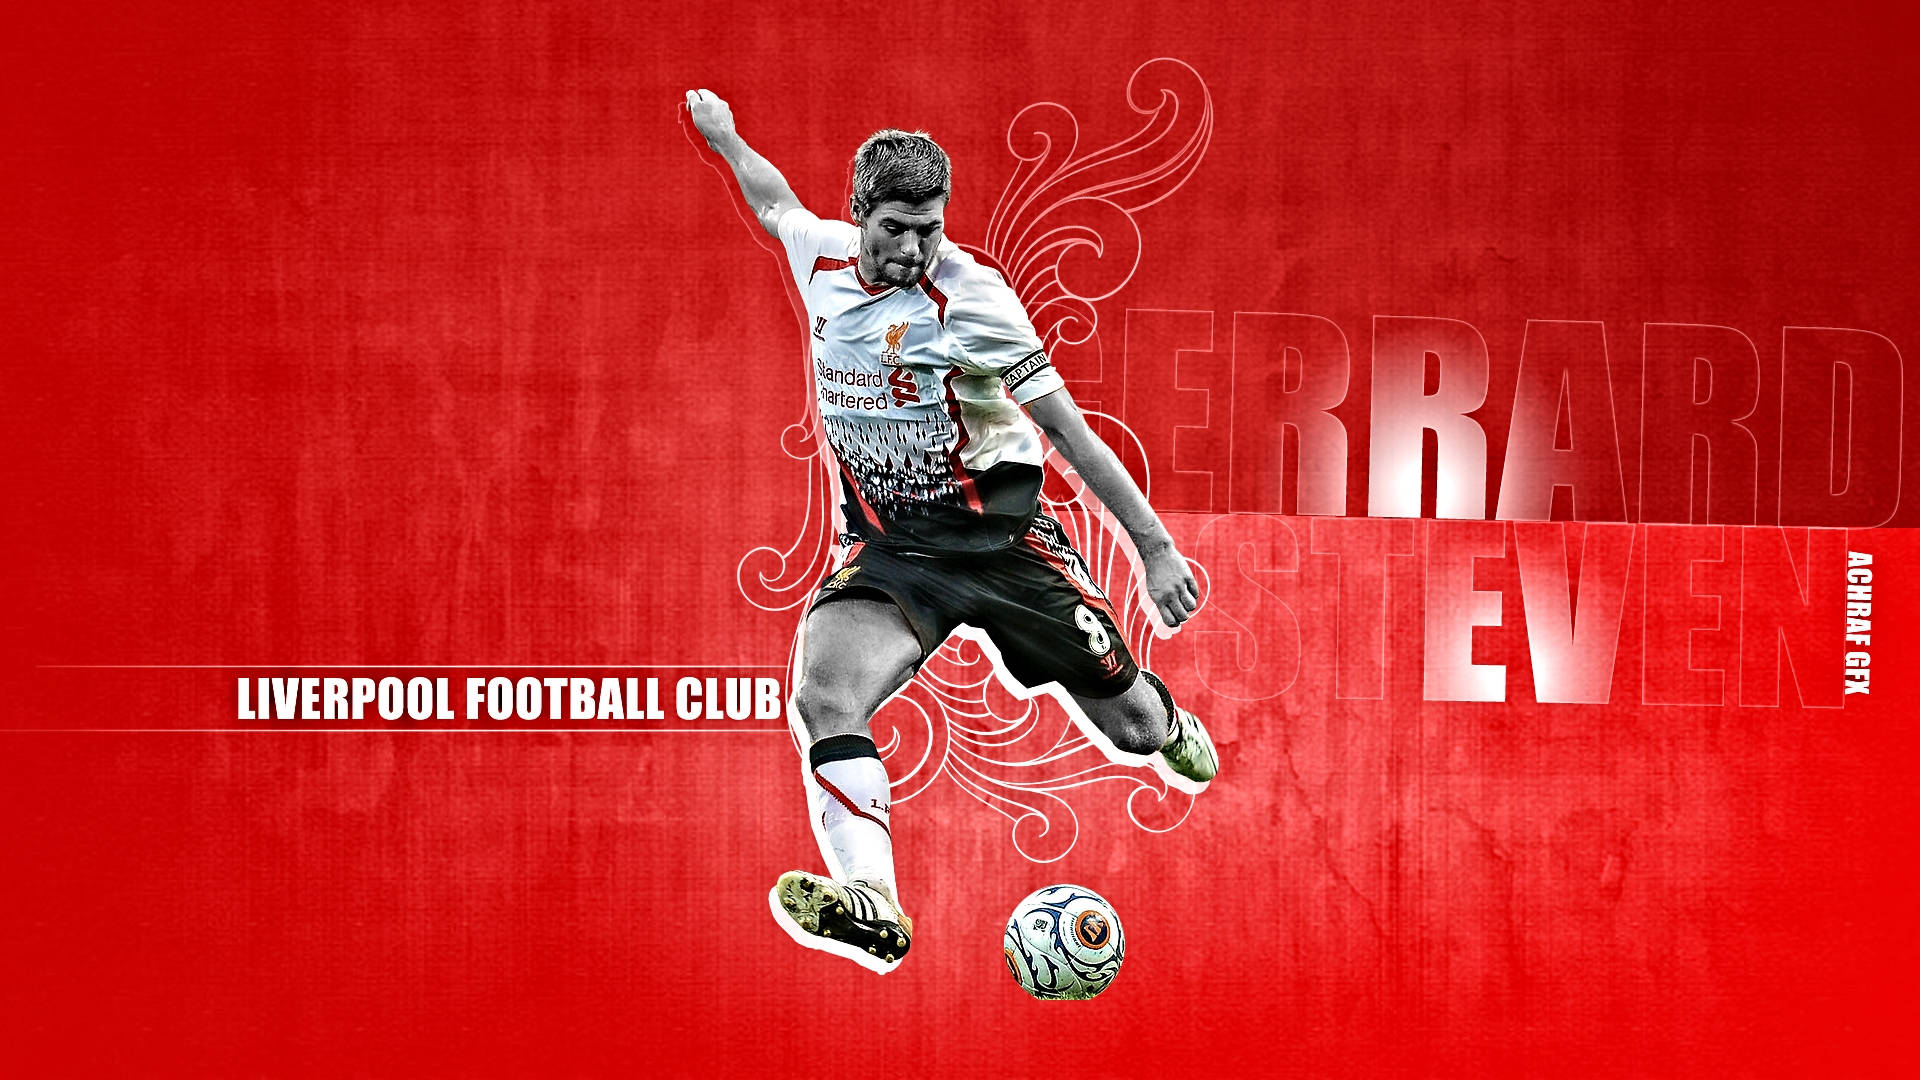 Steven Gerrard Liverpool Football Club Captain Background